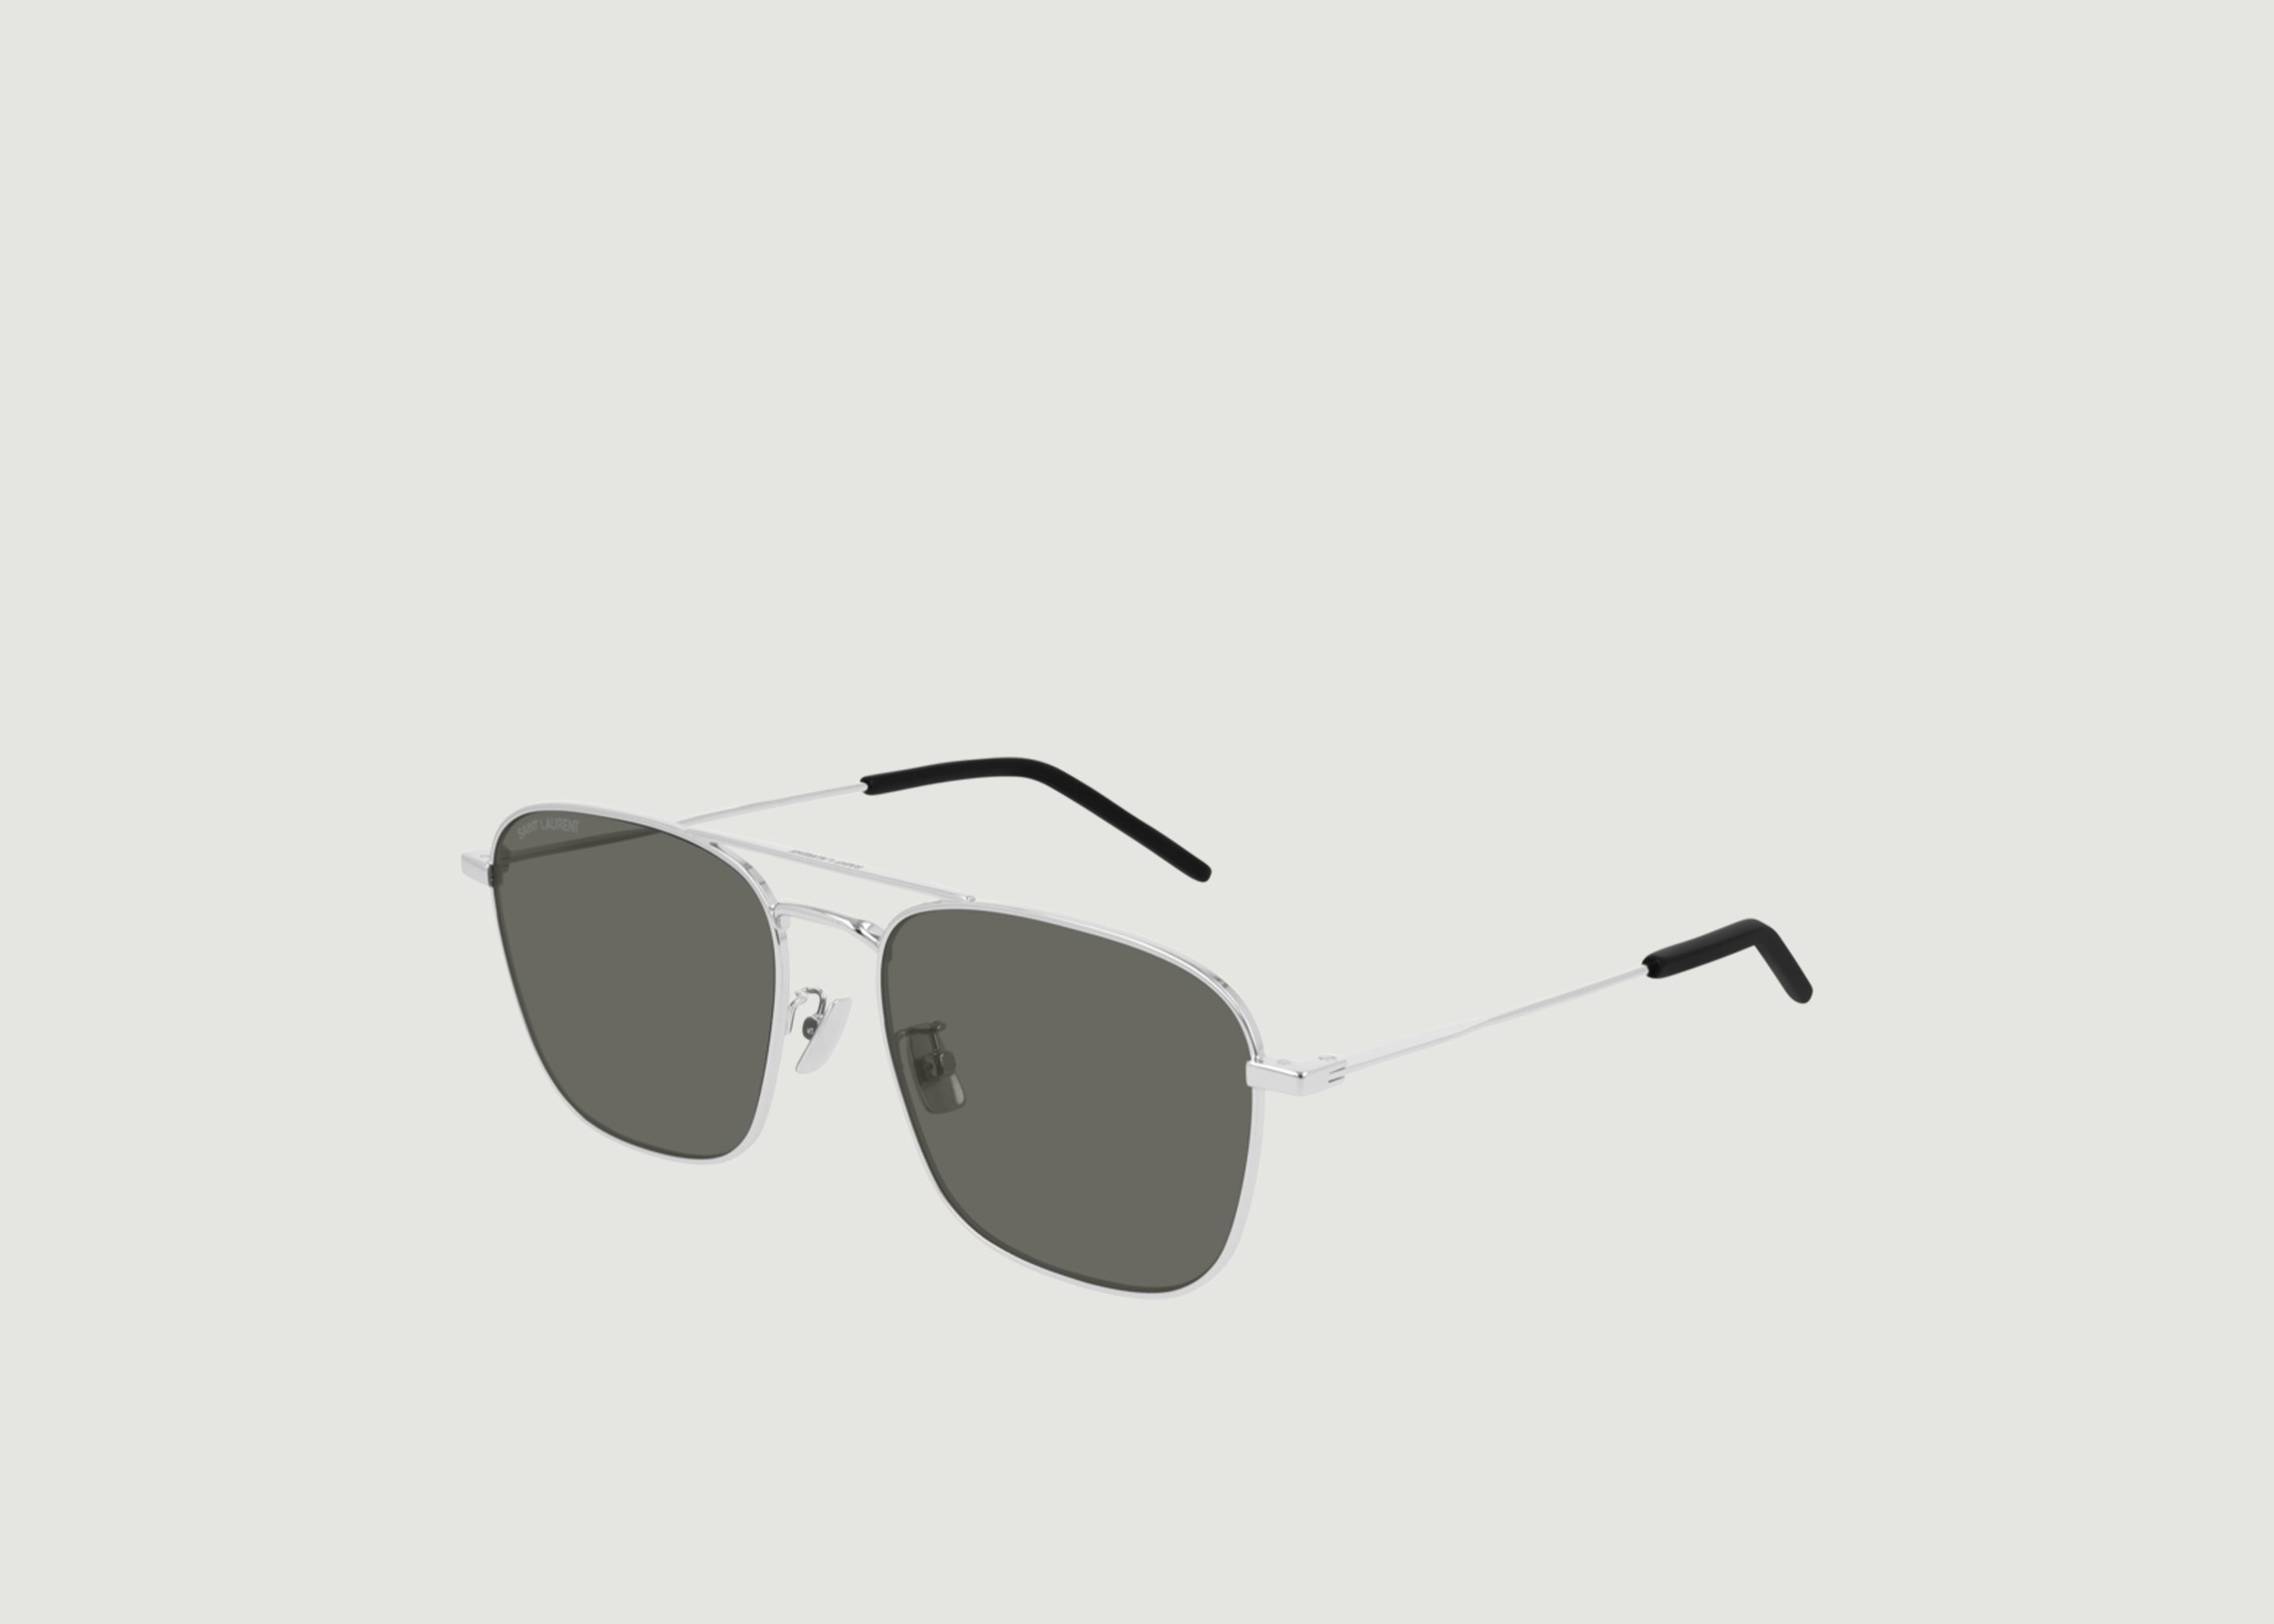 Aviator Sunglasses - Saint Laurent